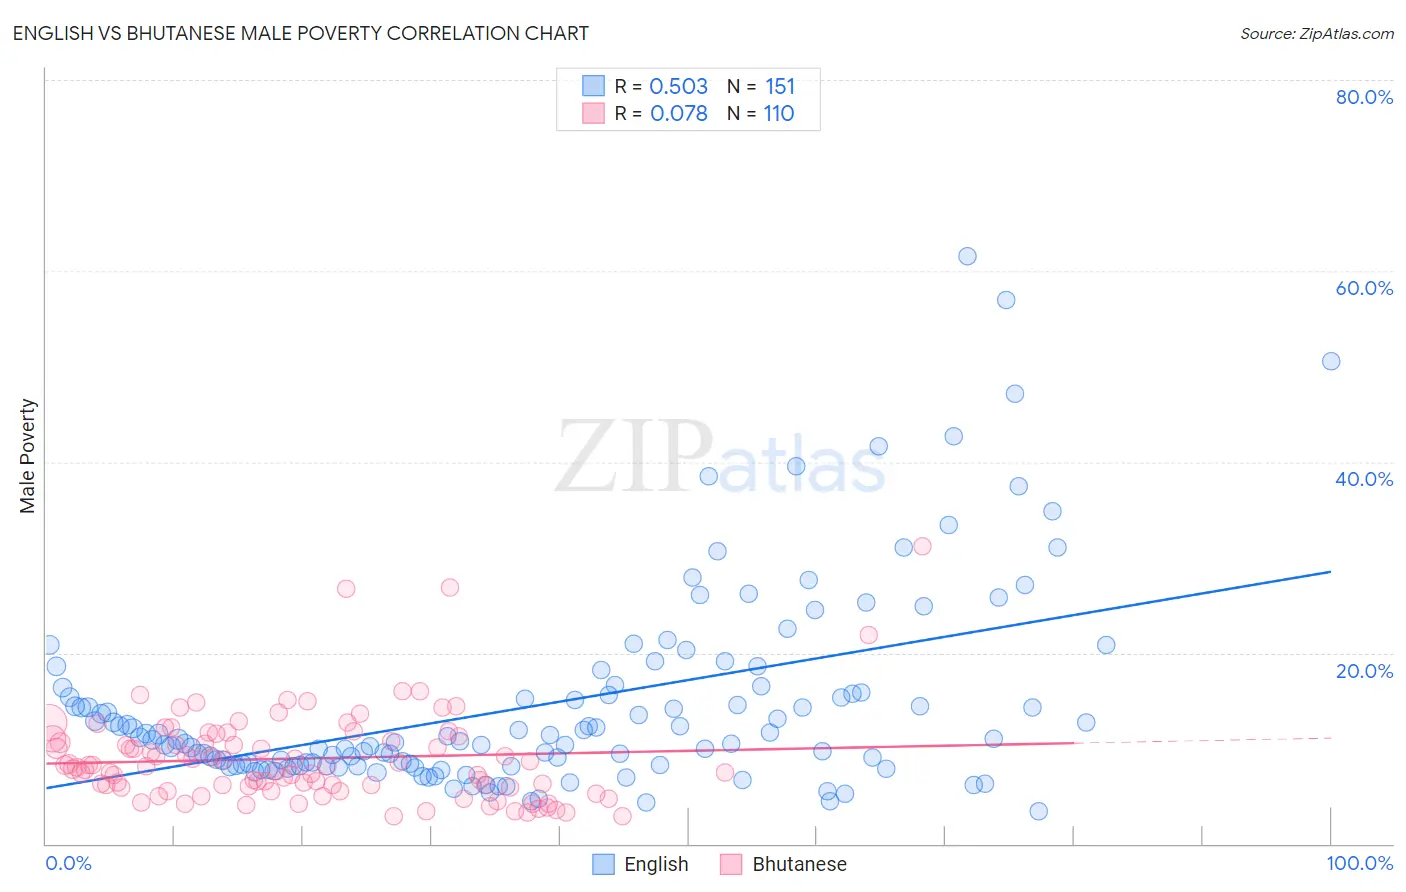 English vs Bhutanese Male Poverty